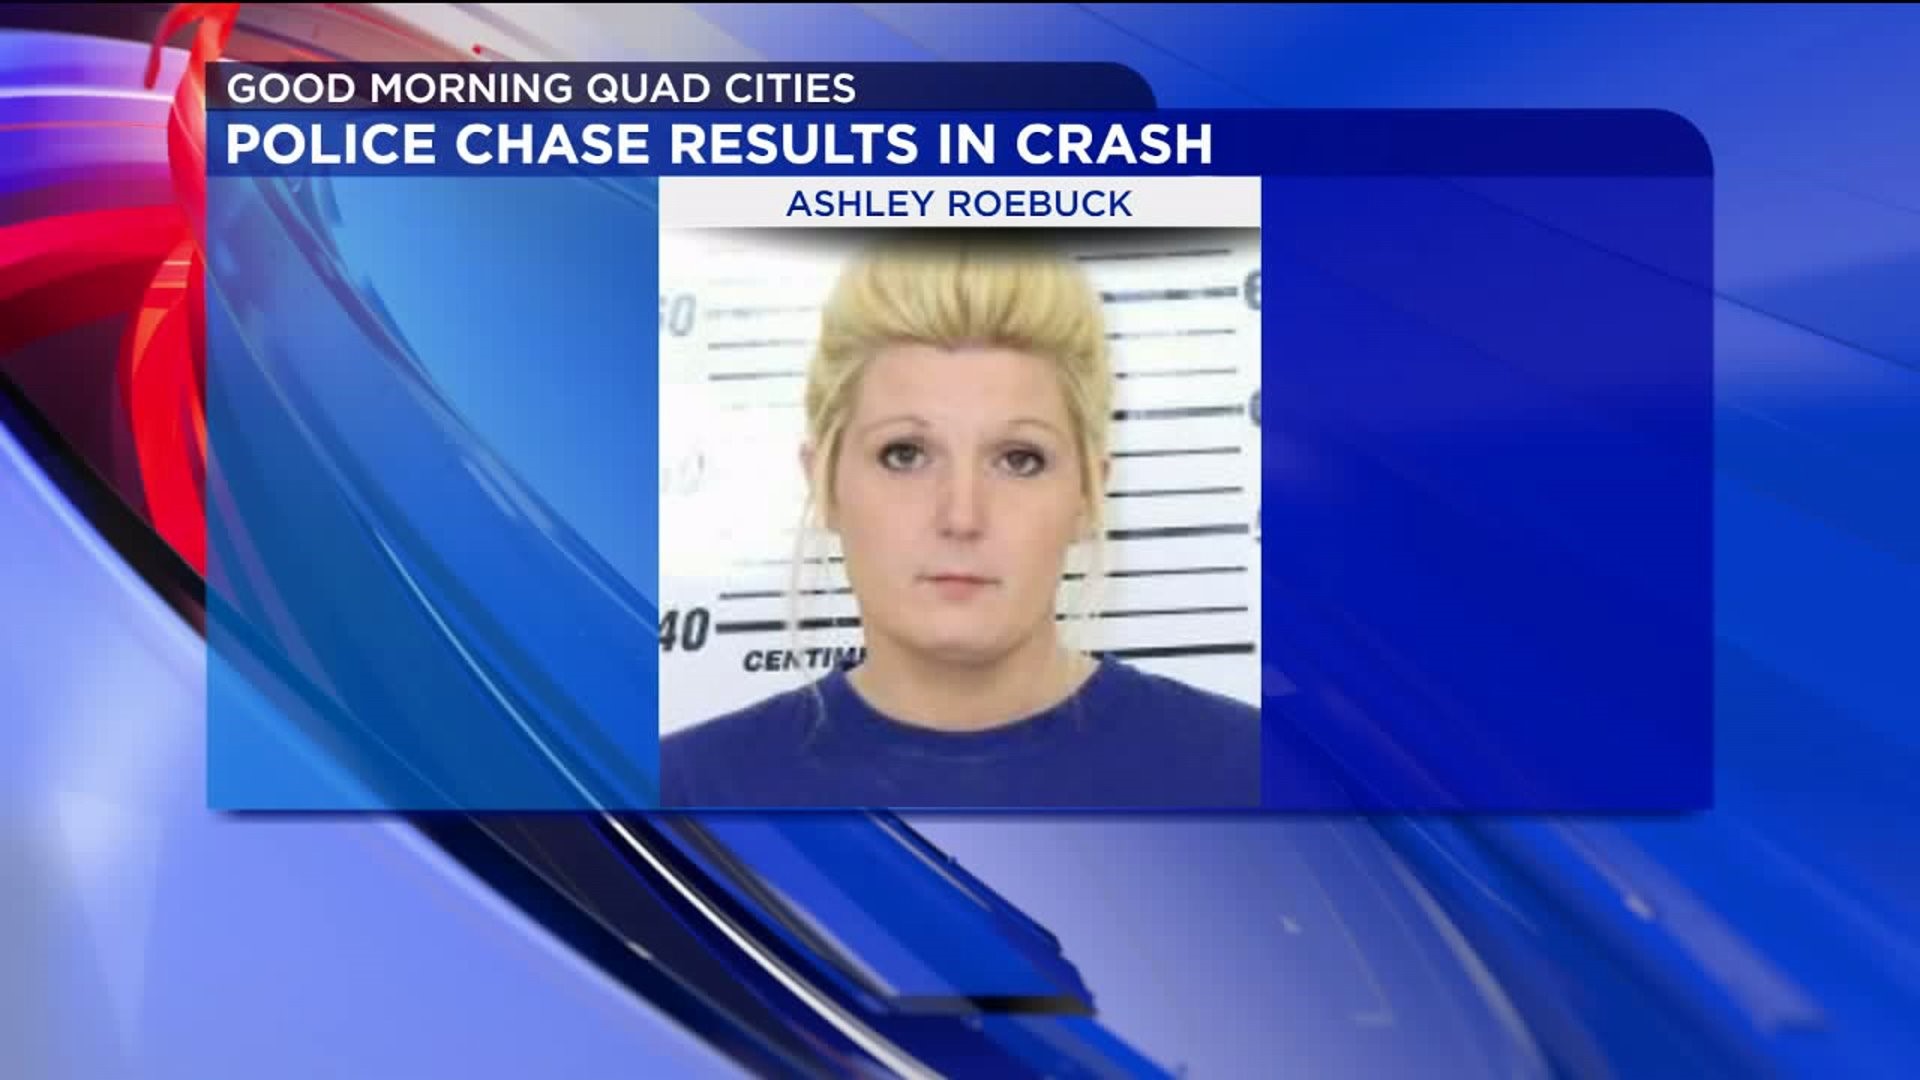 Police Chase Results in Crash